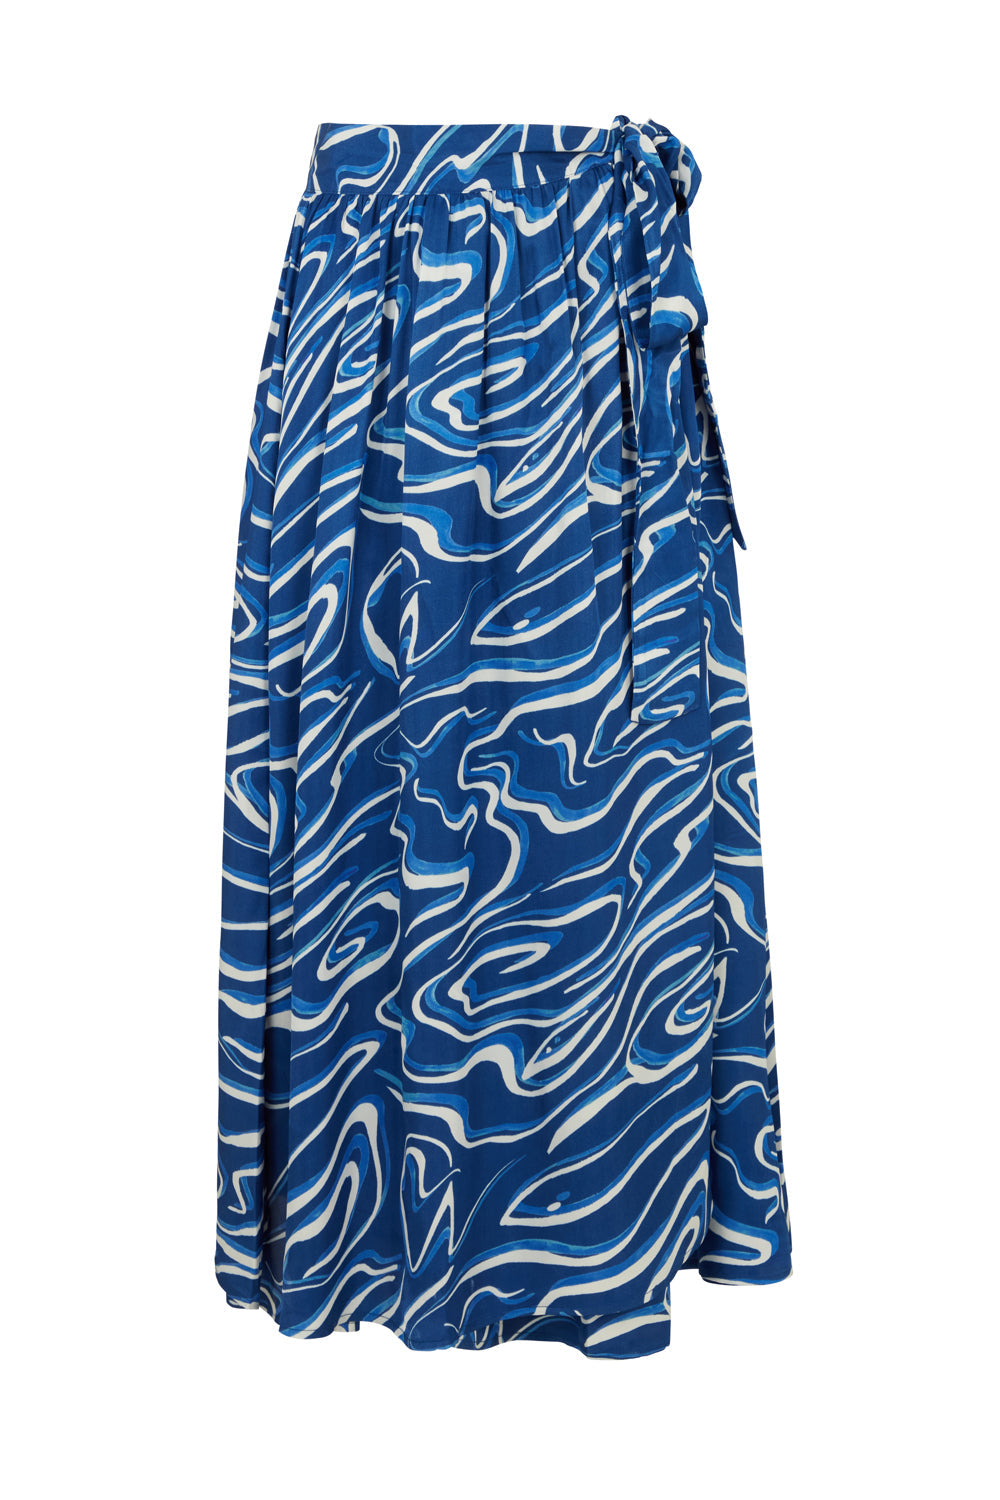 Corrine Blue Wave Wrap Skirt